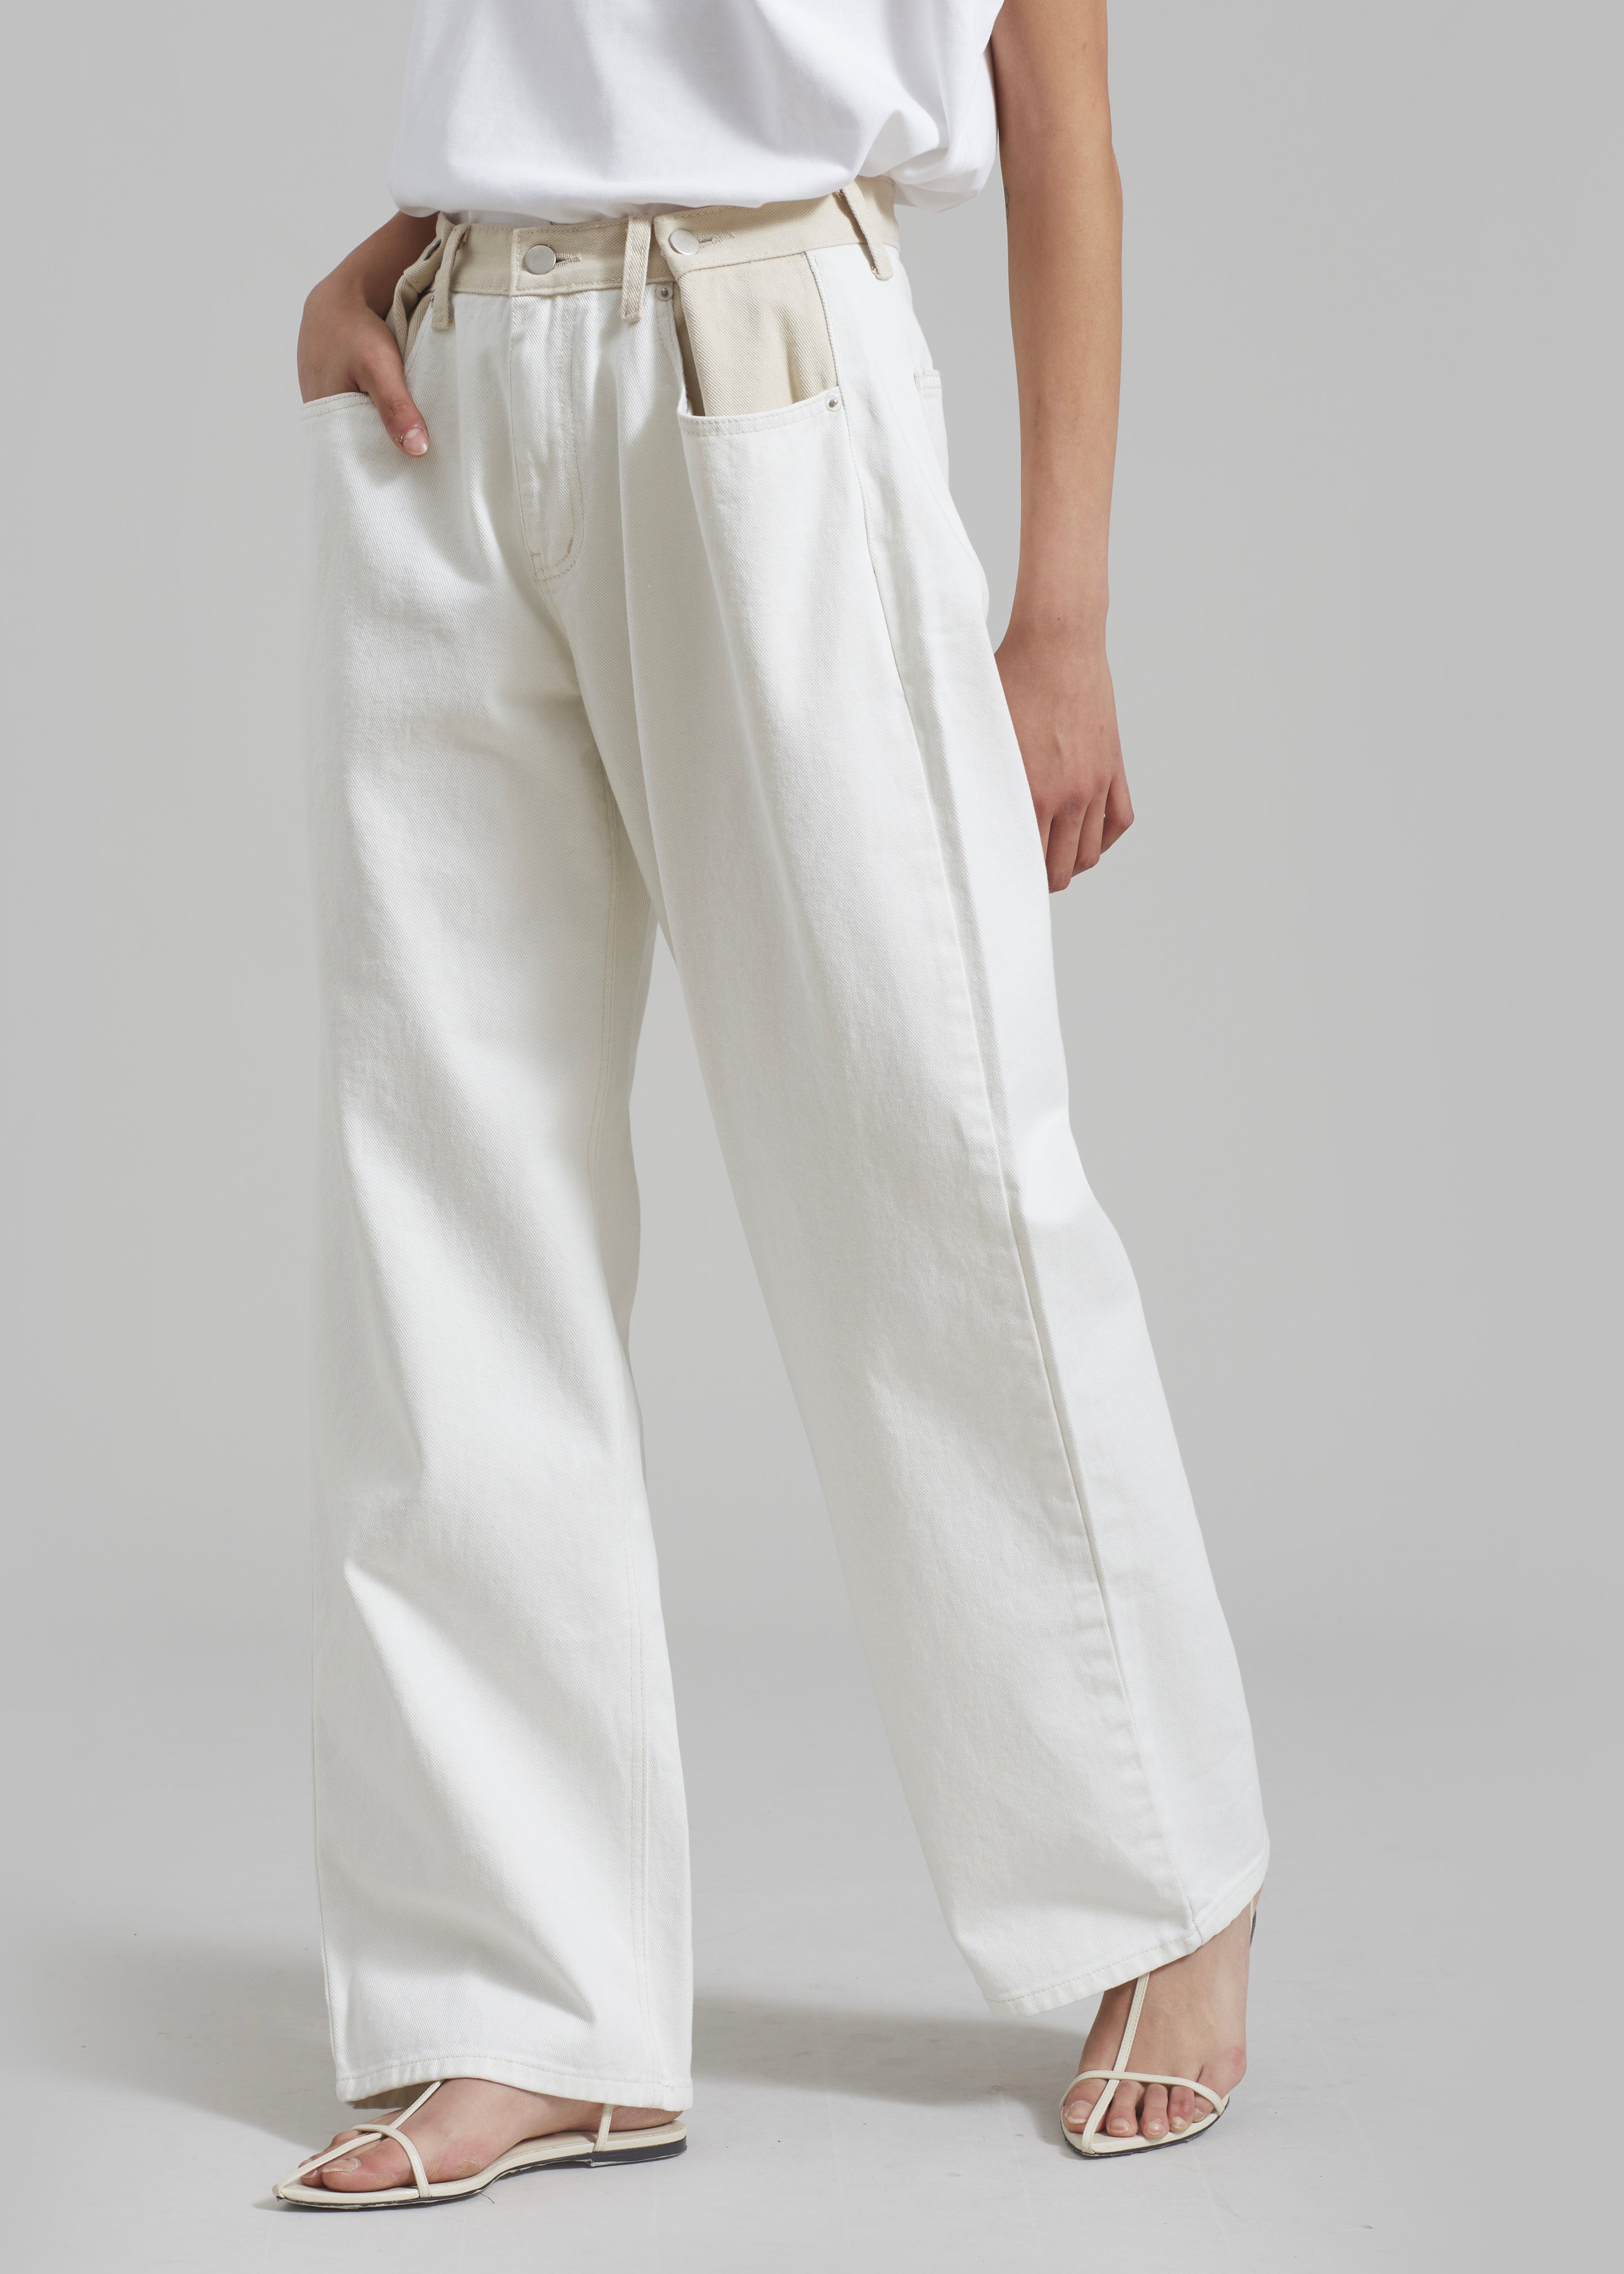 Hayla Contrast Denim Pants - Off White/Beige - 6